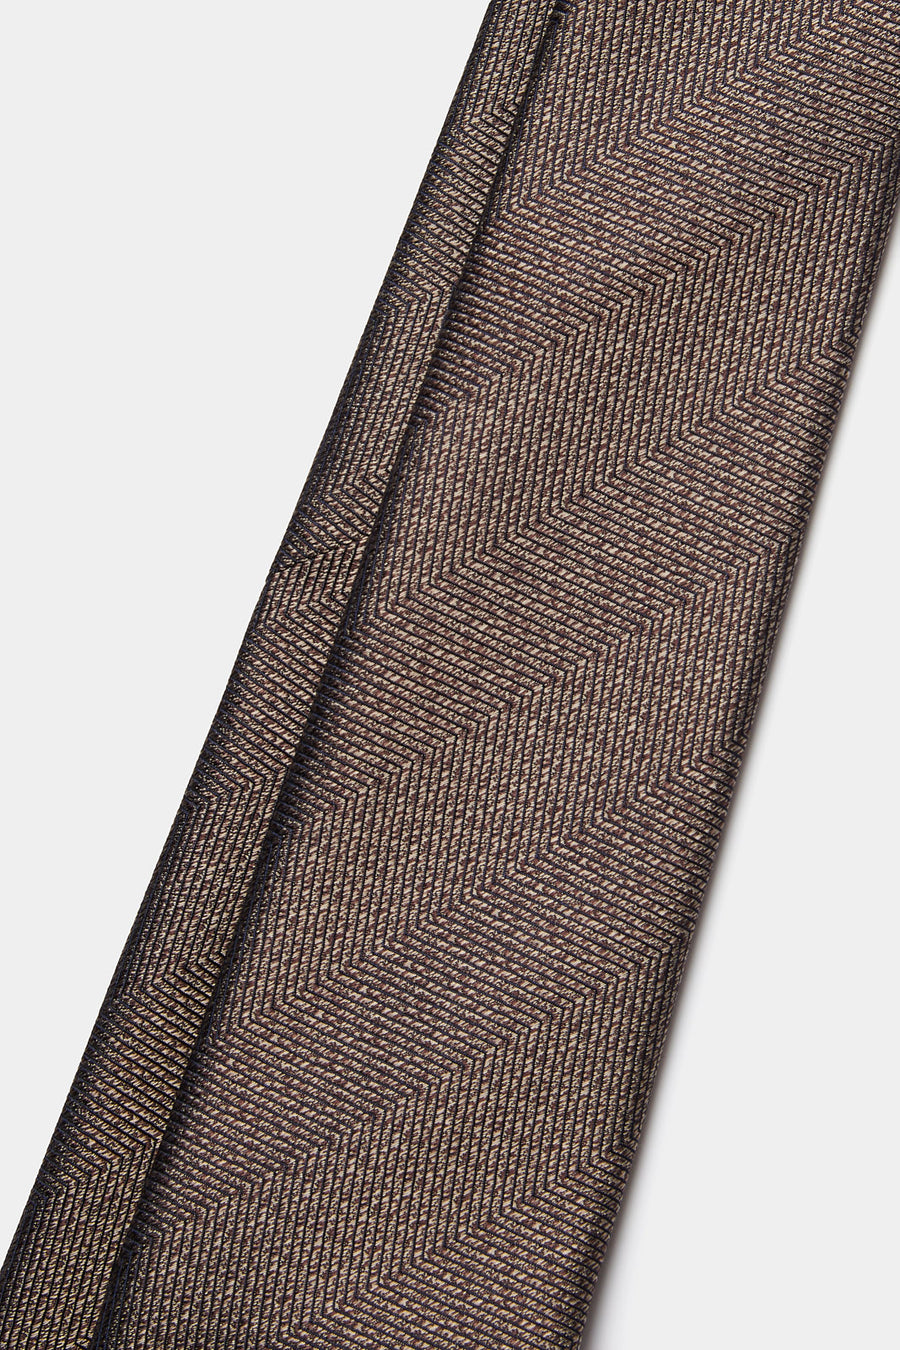 Silk Herringbone Tie in Carafe